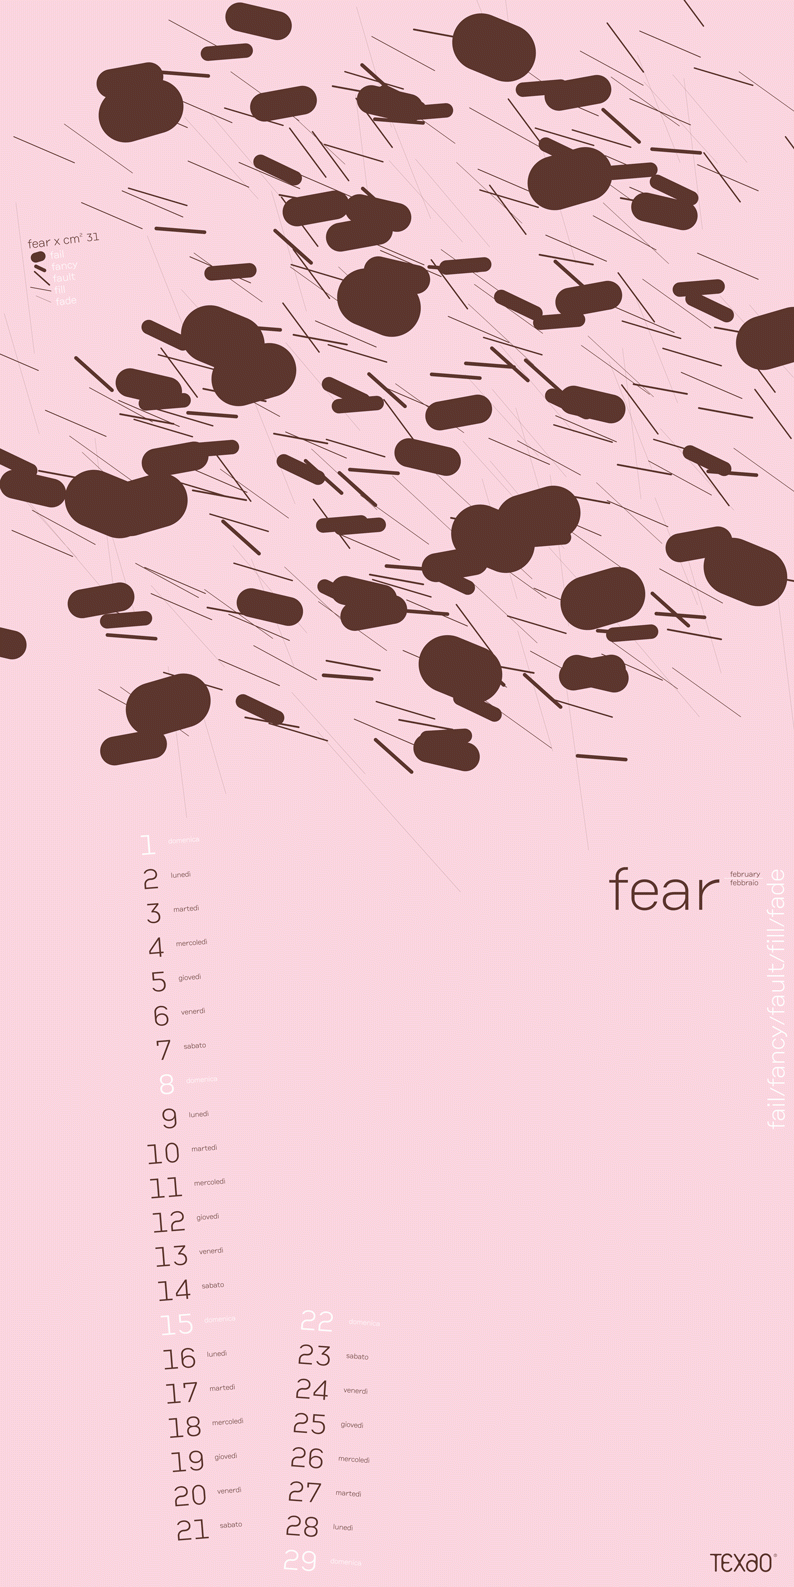 February = Fear